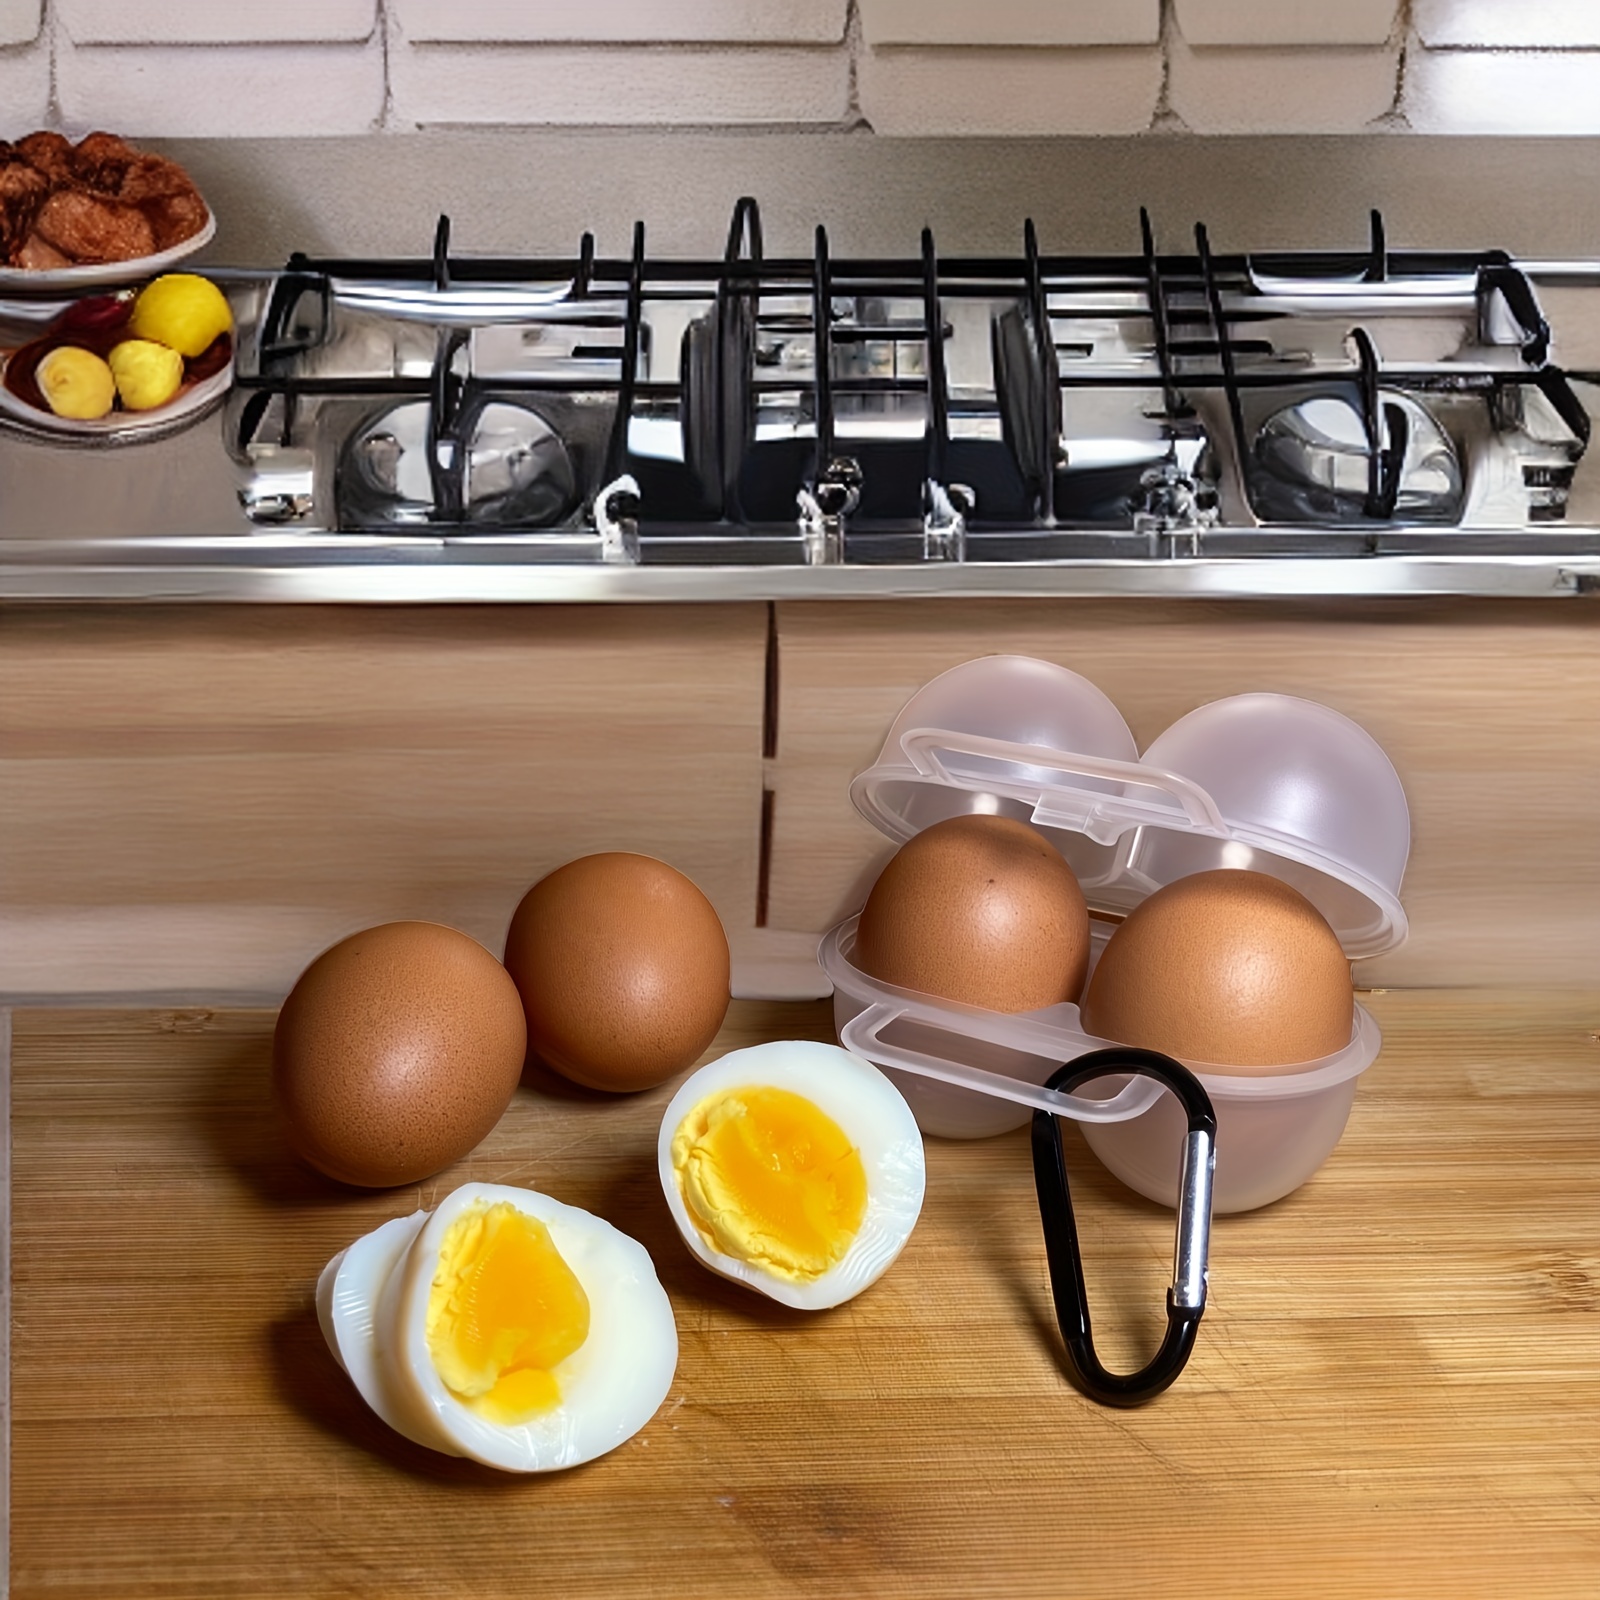  Peleg Design Egguins 3-in-1 Cook, Store and Serve Egg Holder,  Penguin-Shaped Egg Cooker for Making Soft or Hard Boiled Eggs, Holds 6 Eggs  for Easy Cooking and Fridge Storage: Home 